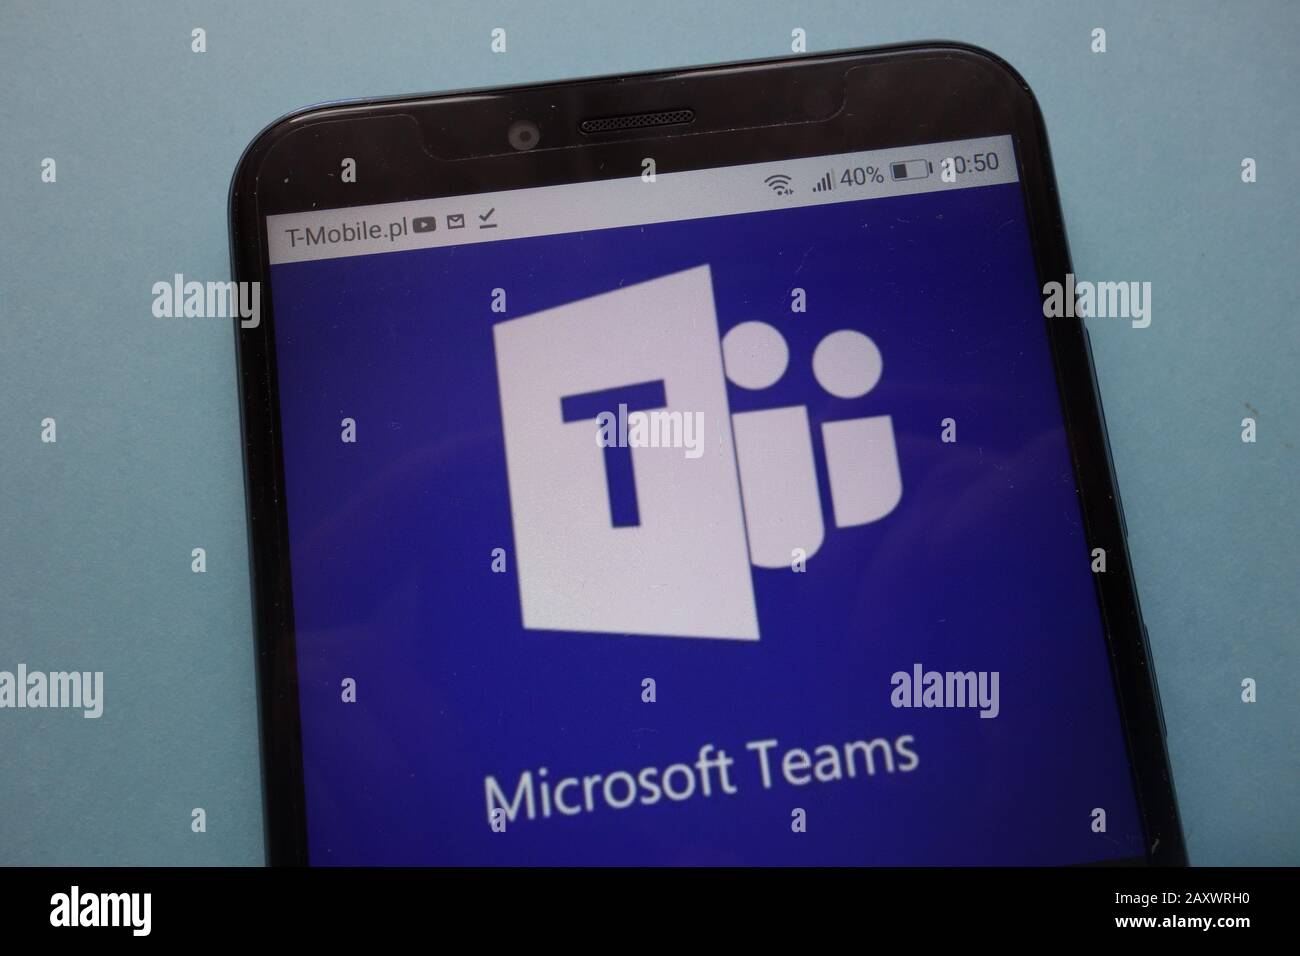 Microsoft Teams logo displayed on smartphone Stock Photo